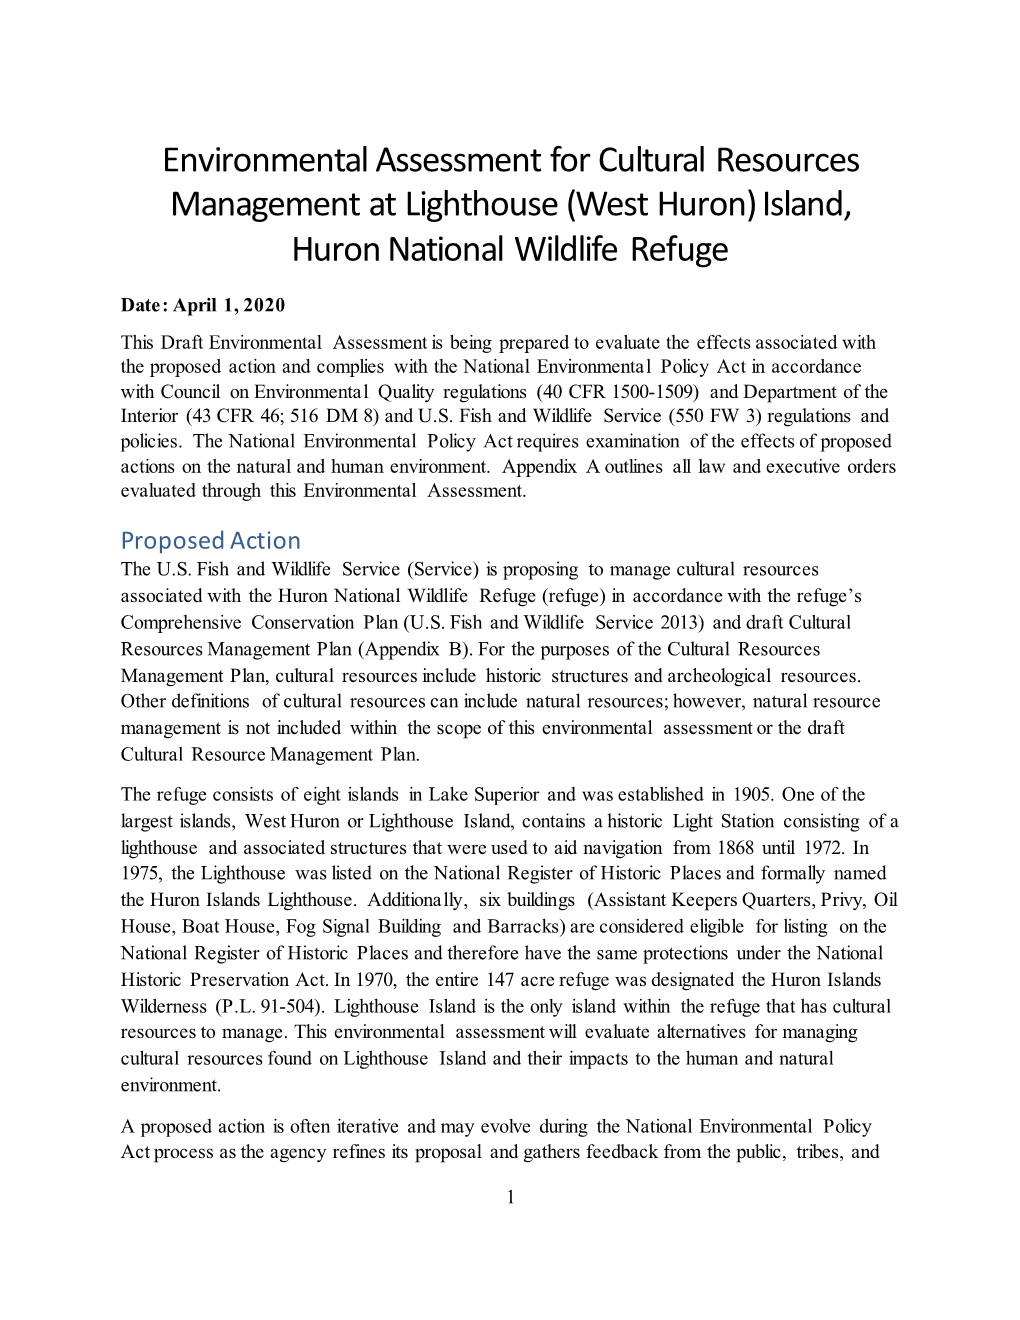 Environmental Assessment for Cultural Resources Management at Lighthouse (West Huron) Island, Huron National Wildlife Refuge